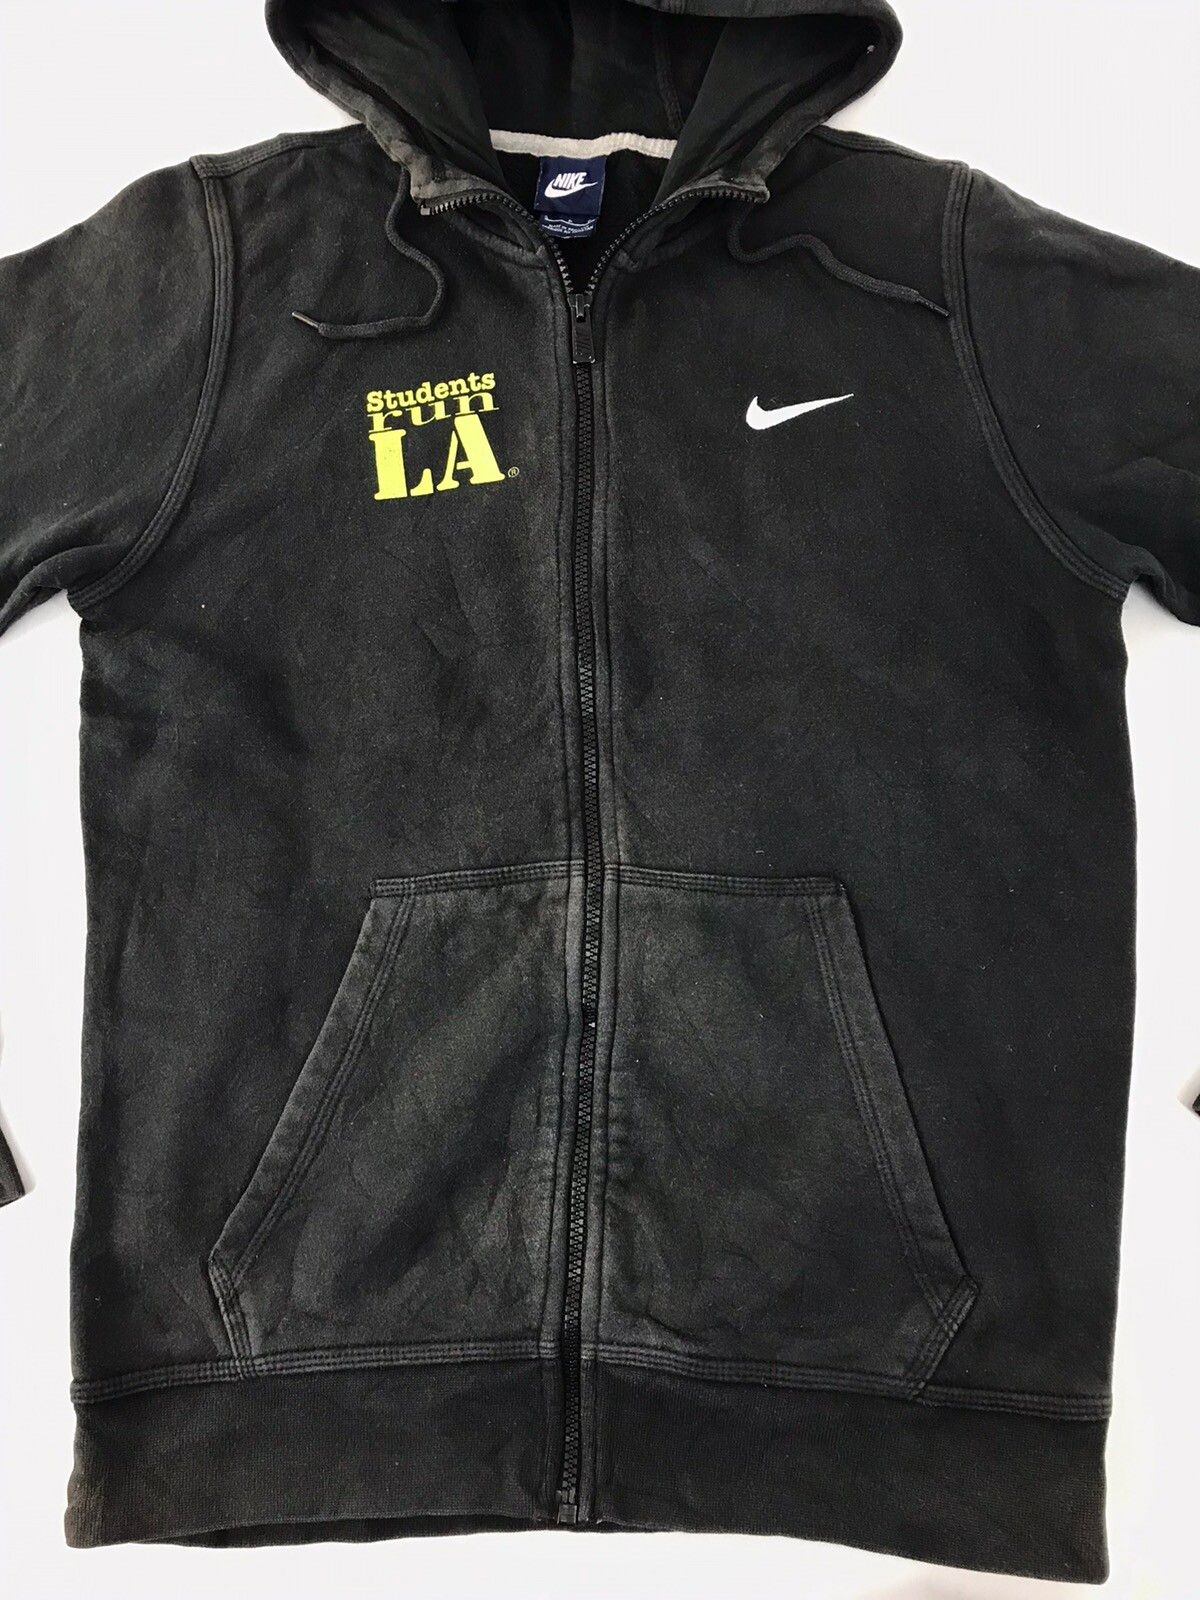 Nike Nike Marathon Finisher Student Run LA Hoodies Jacket Zip Up Size US M / EU 48-50 / 2 - 3 Thumbnail